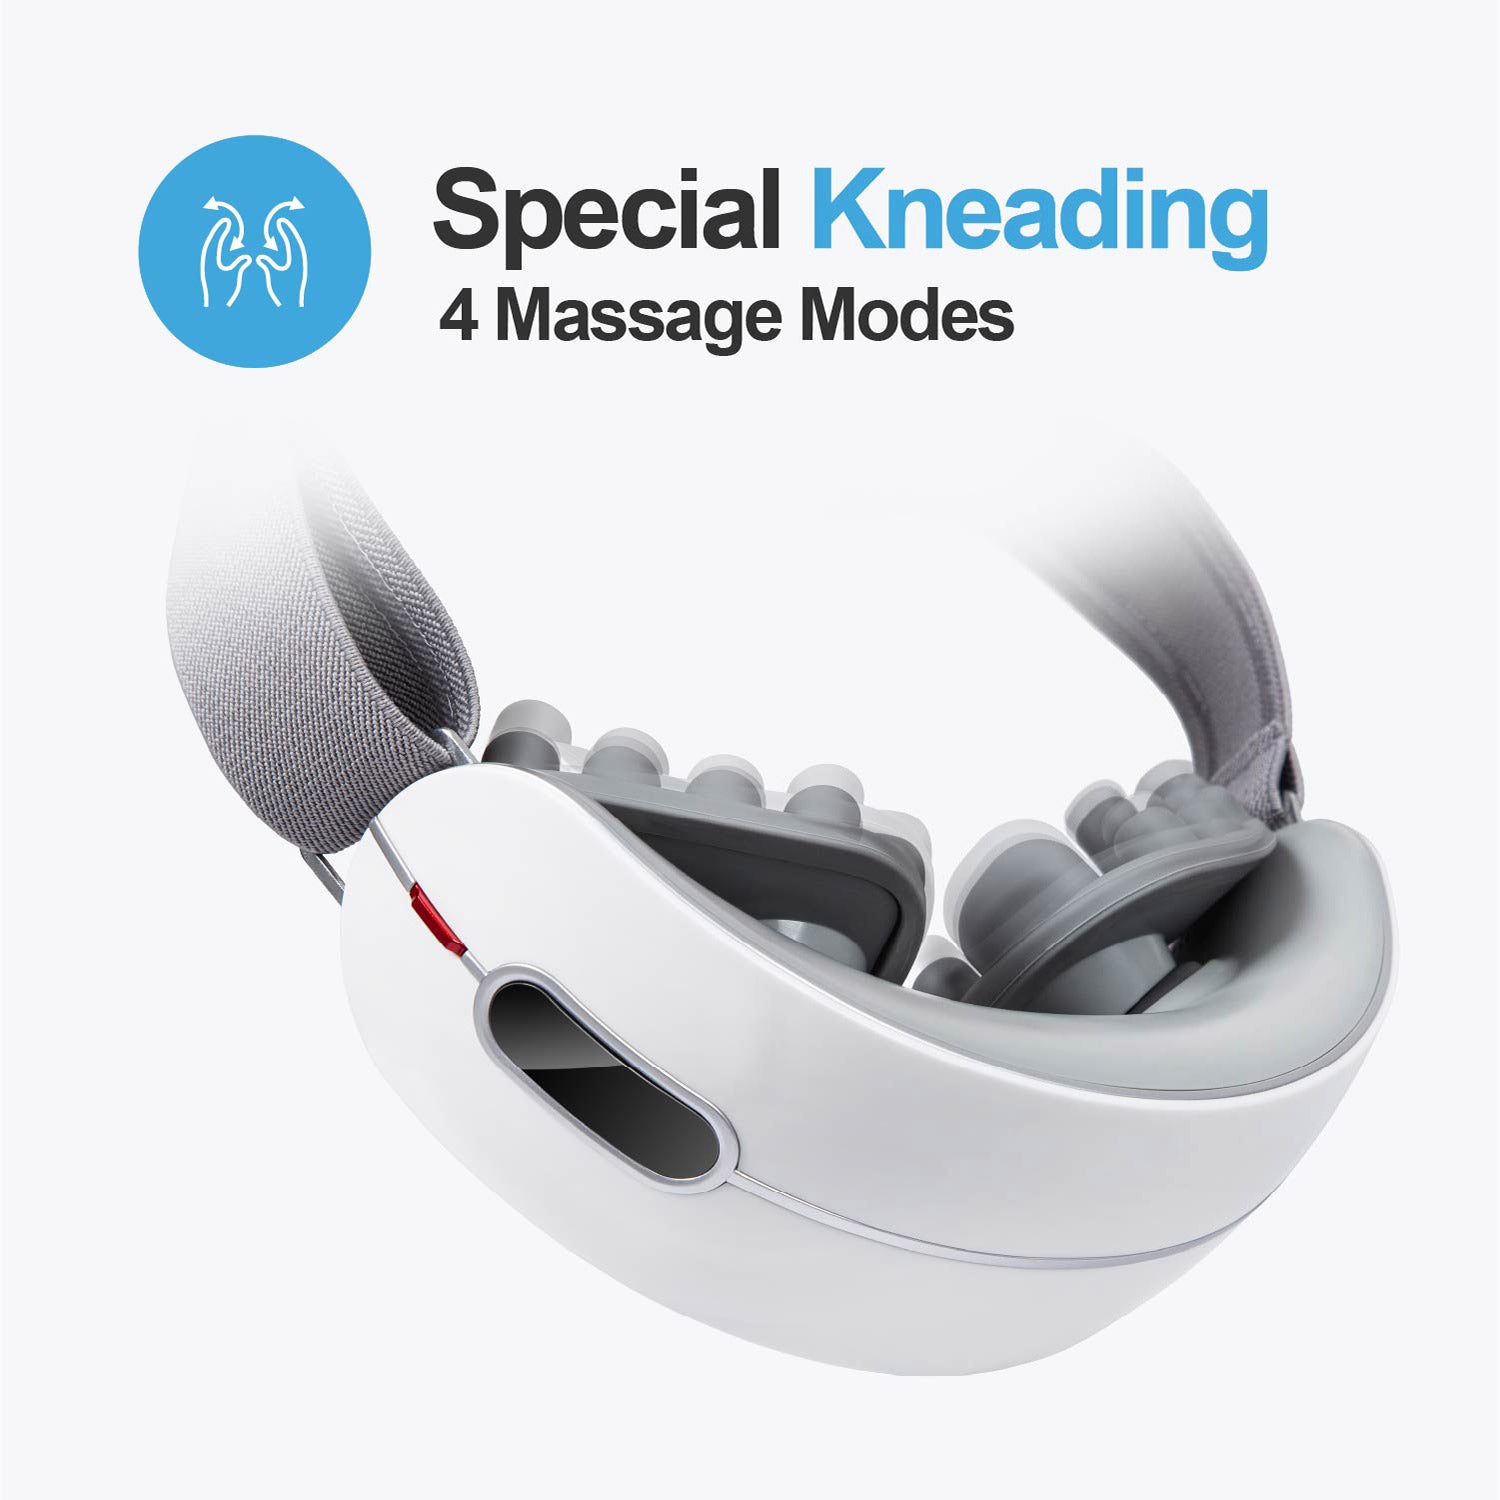 AmaMedic AM-4602 Kneading Eye Massager